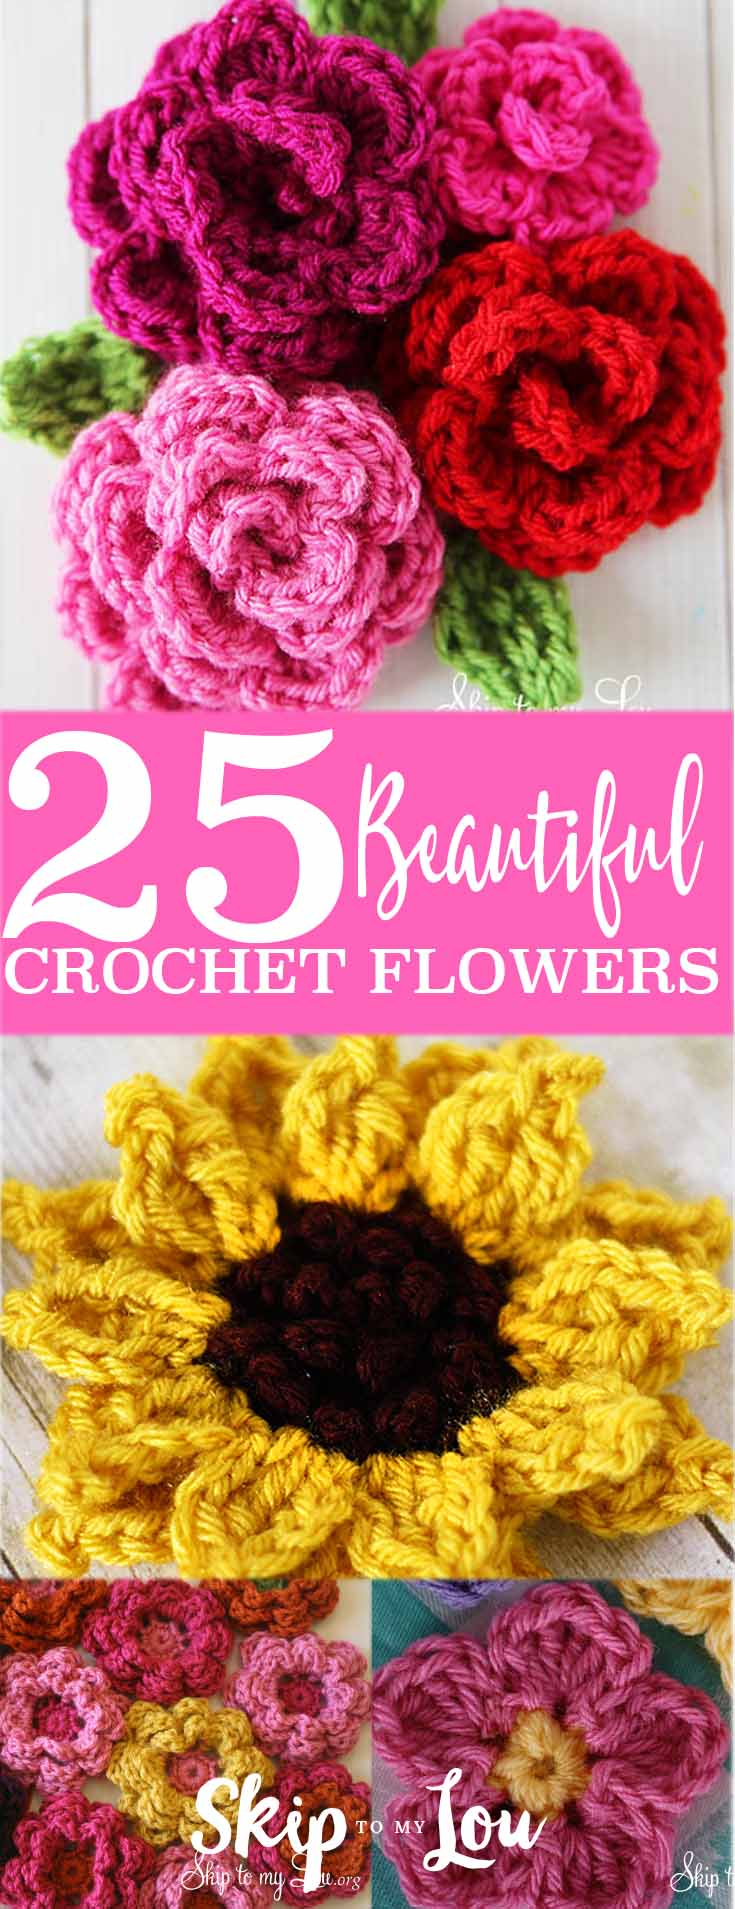 Small Crochet Flower Pattern 10 Beautiful Crochet Flowers To Make Skip To My Lou